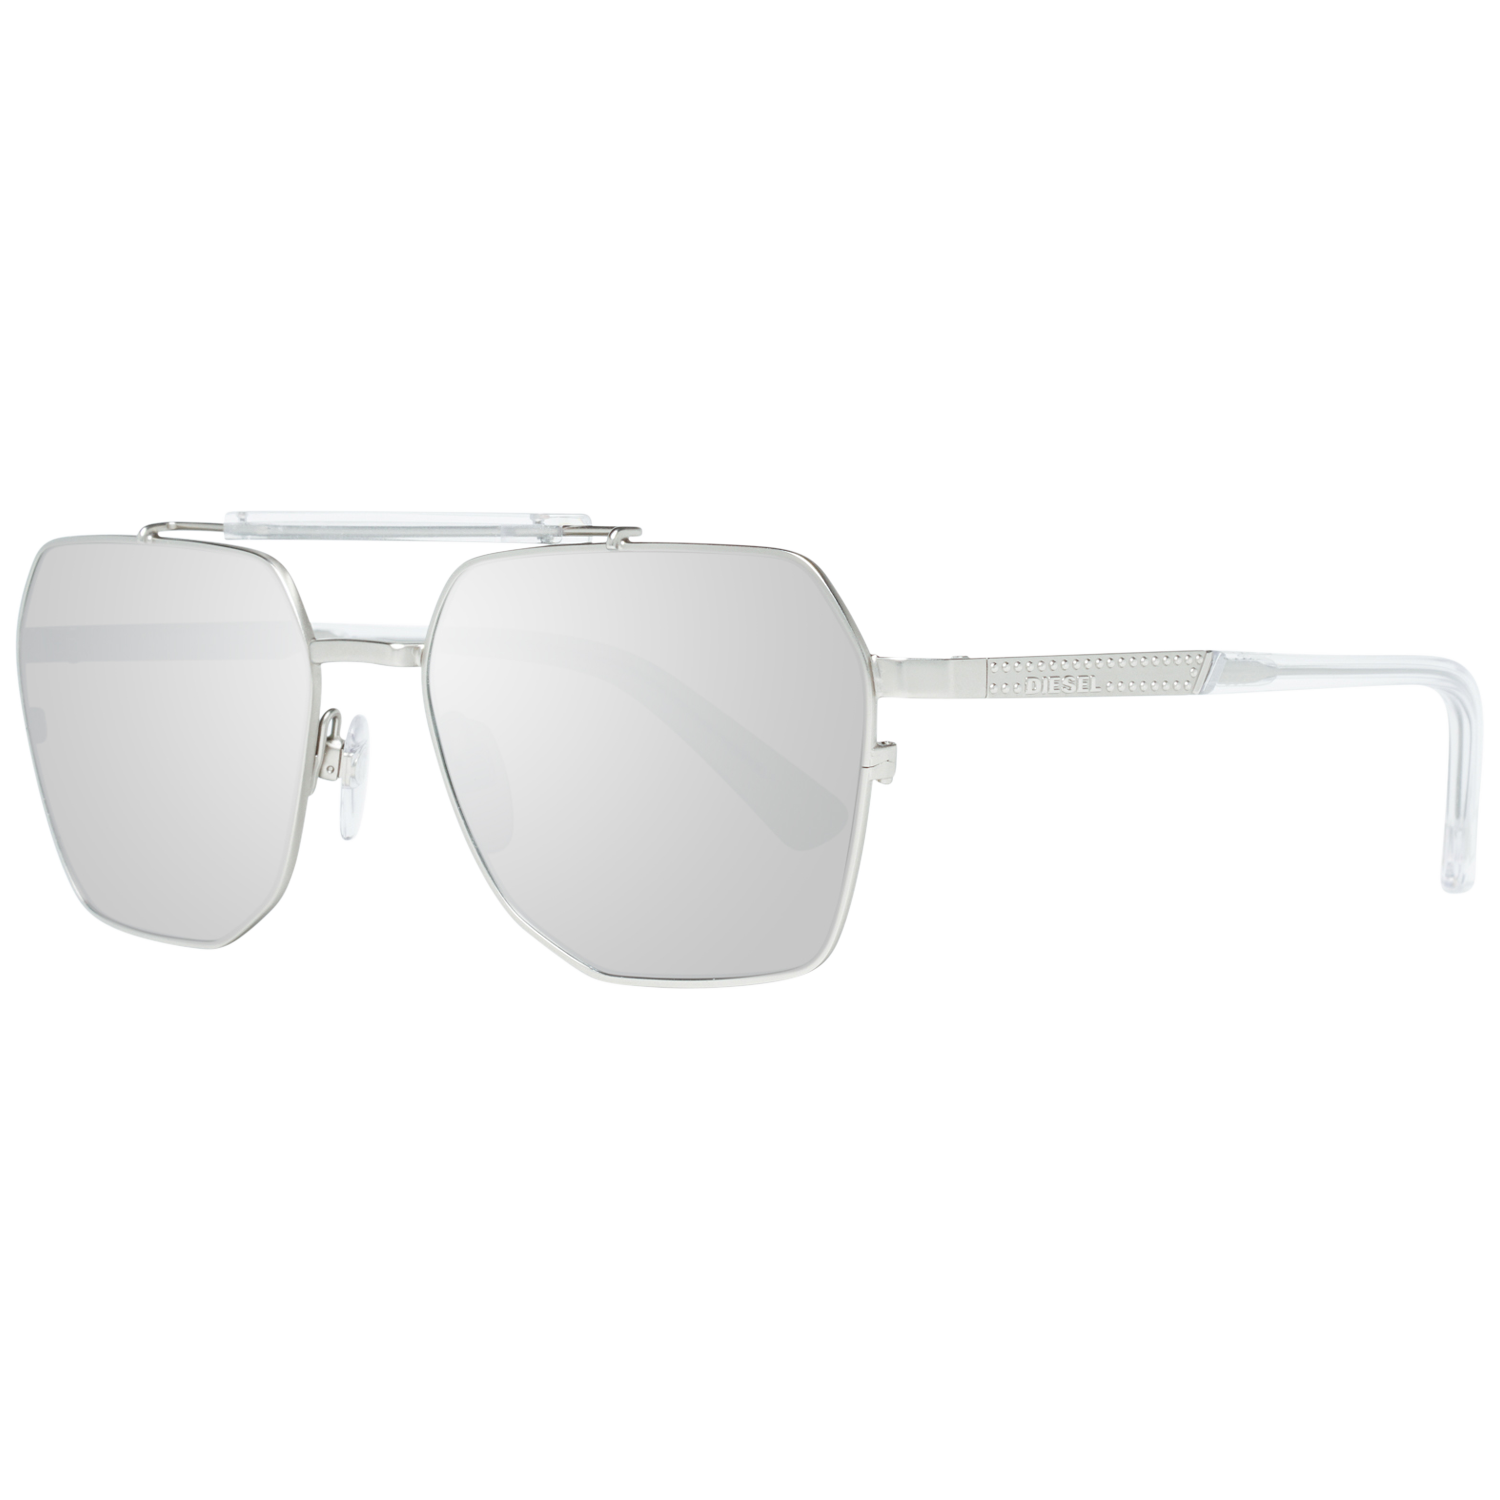 Diesel Sunglasses DL0256 16C 56